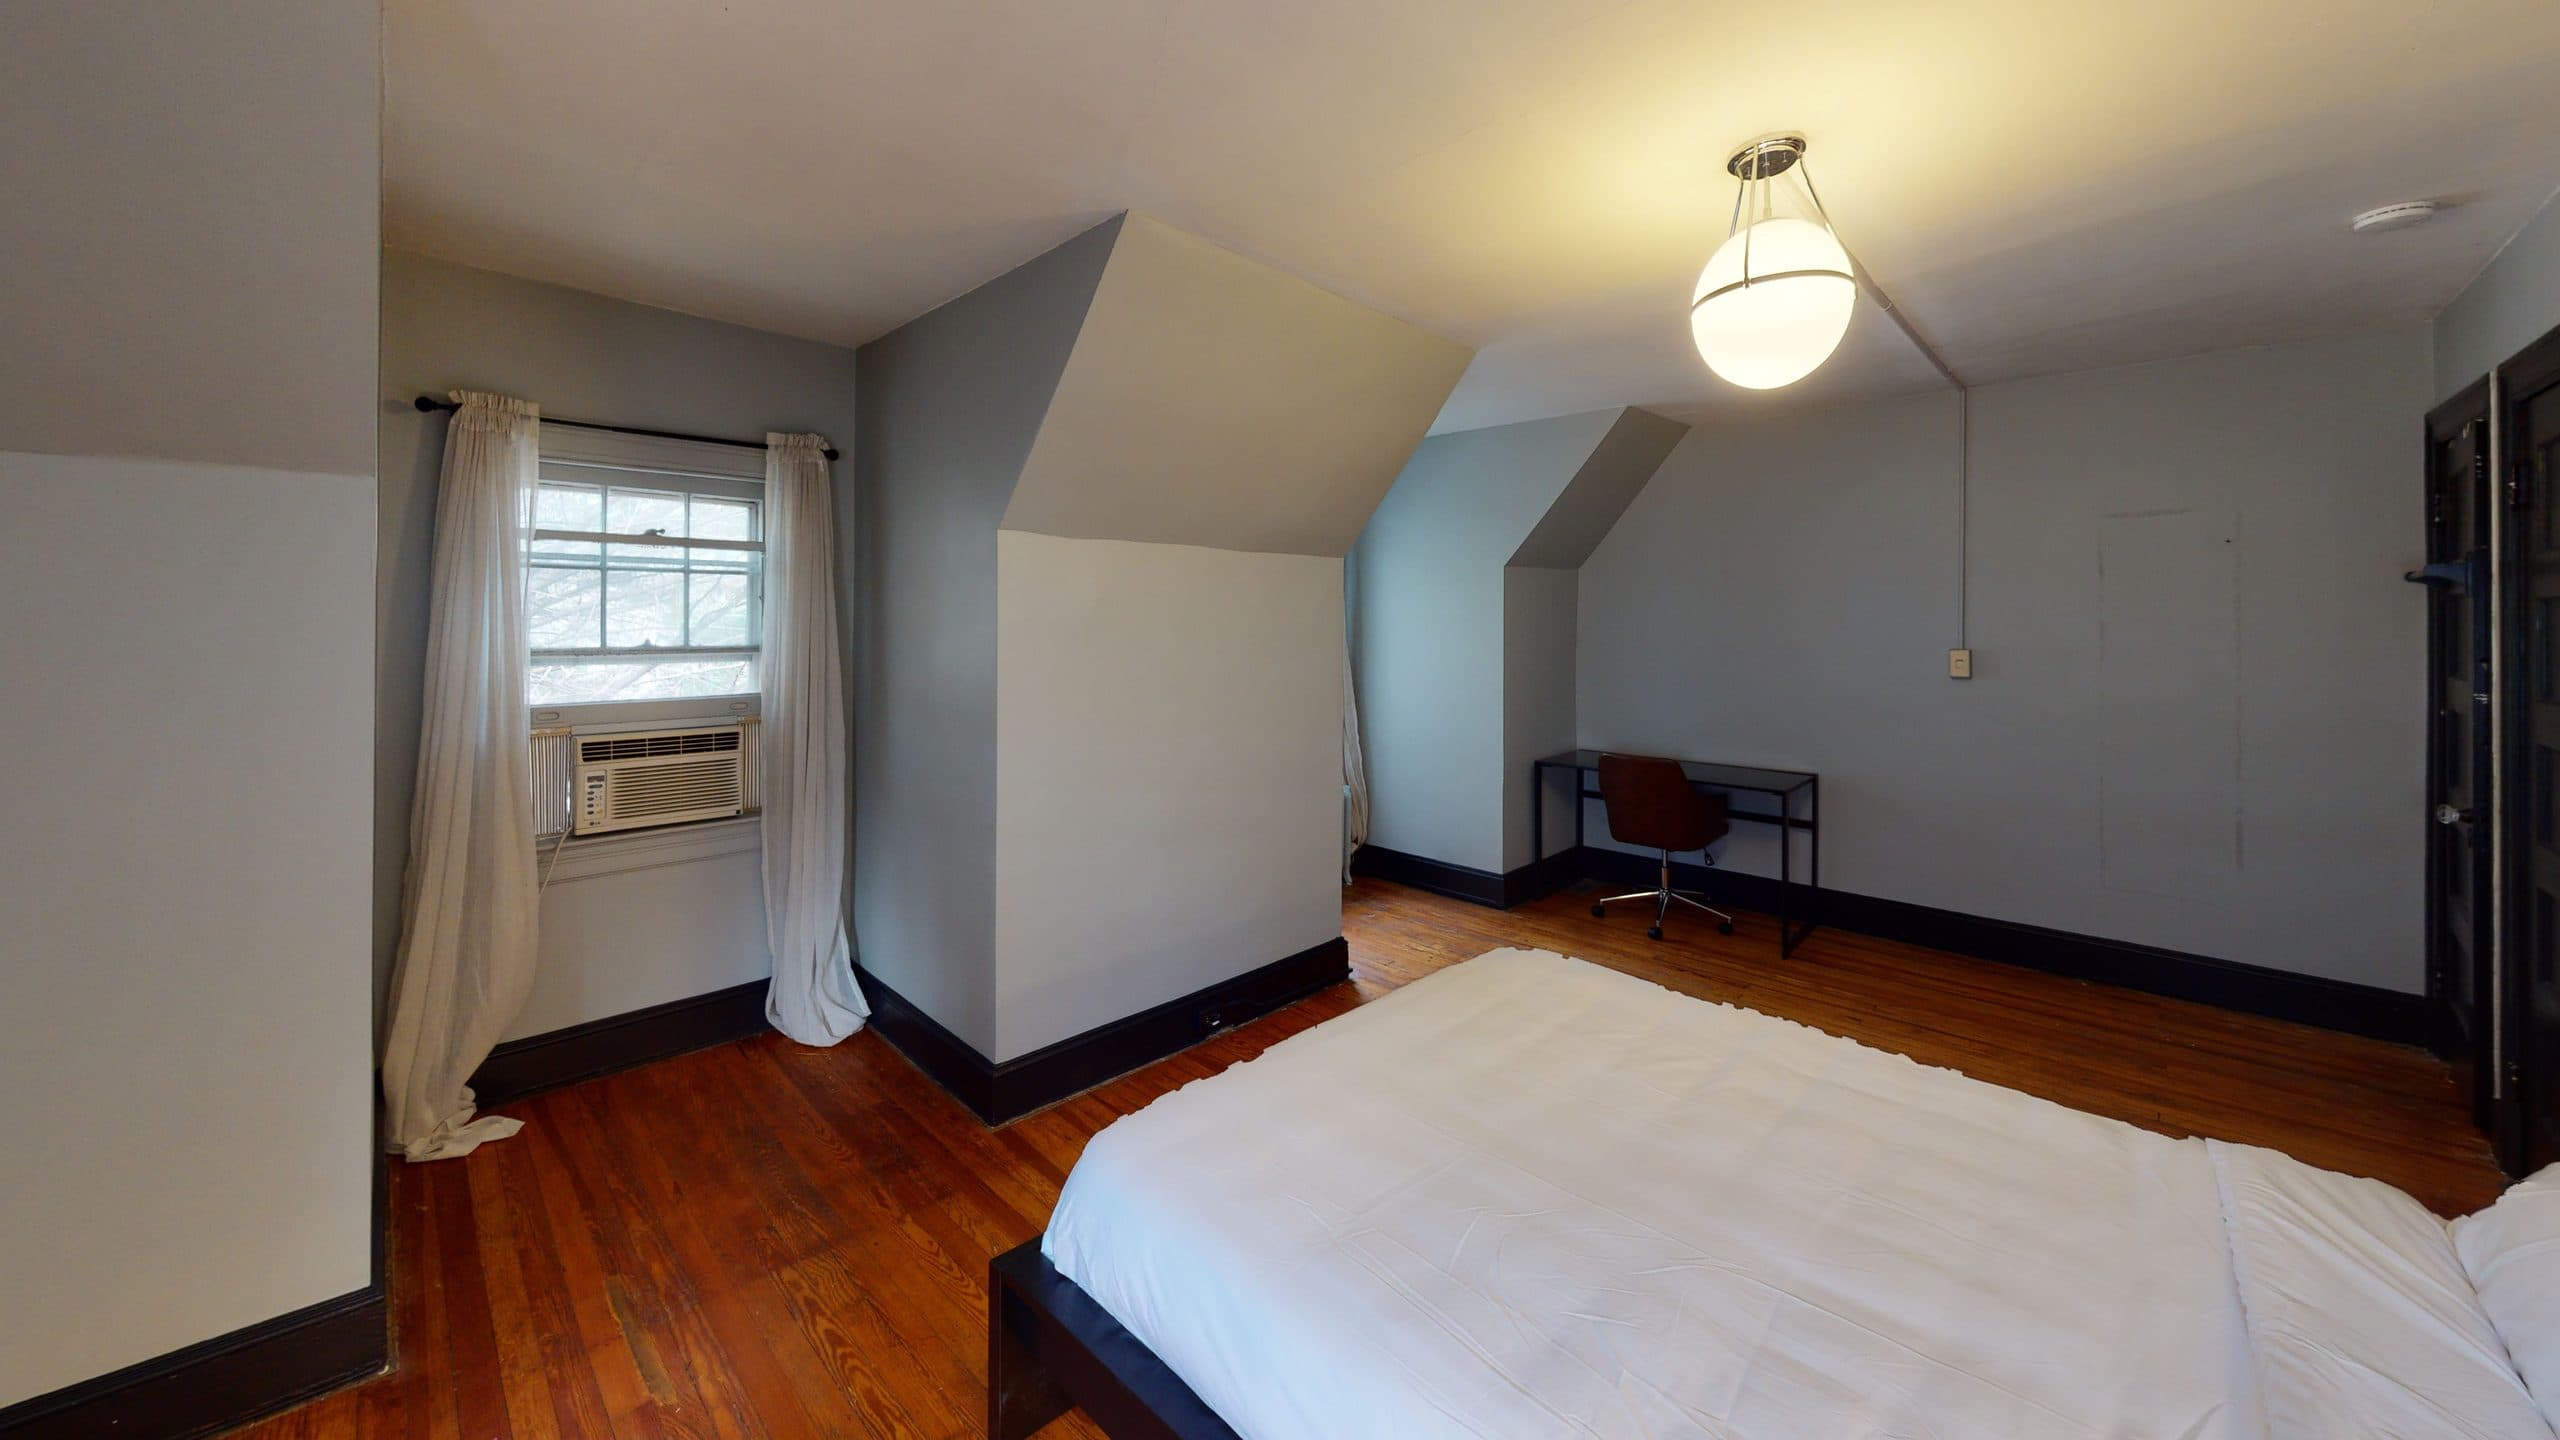 Photo 15 of #128: Full Bedroom 3B at June Homes